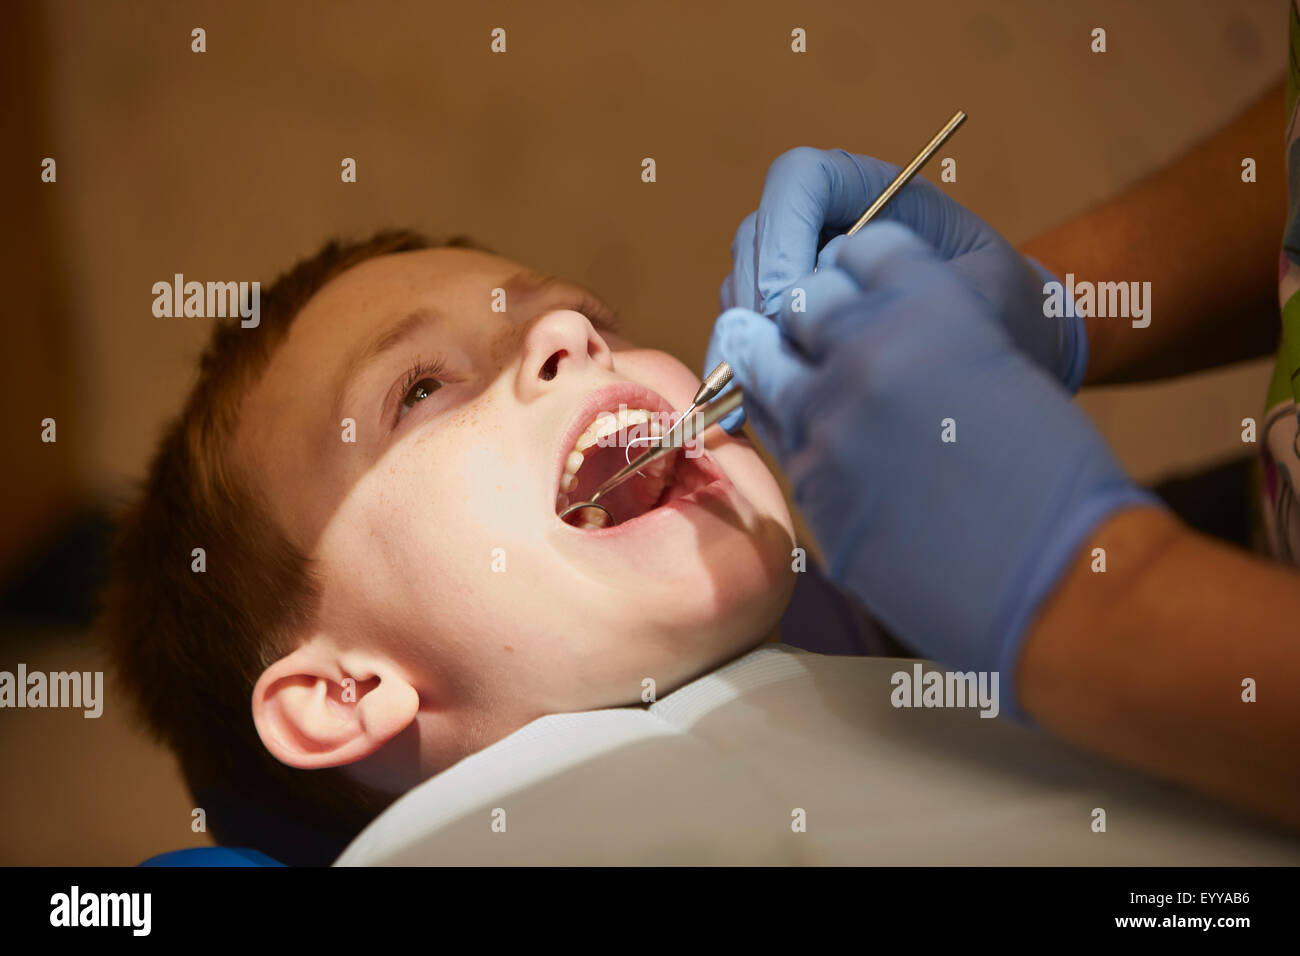 Pediatric dentist examining teeth of patient Stock Photo